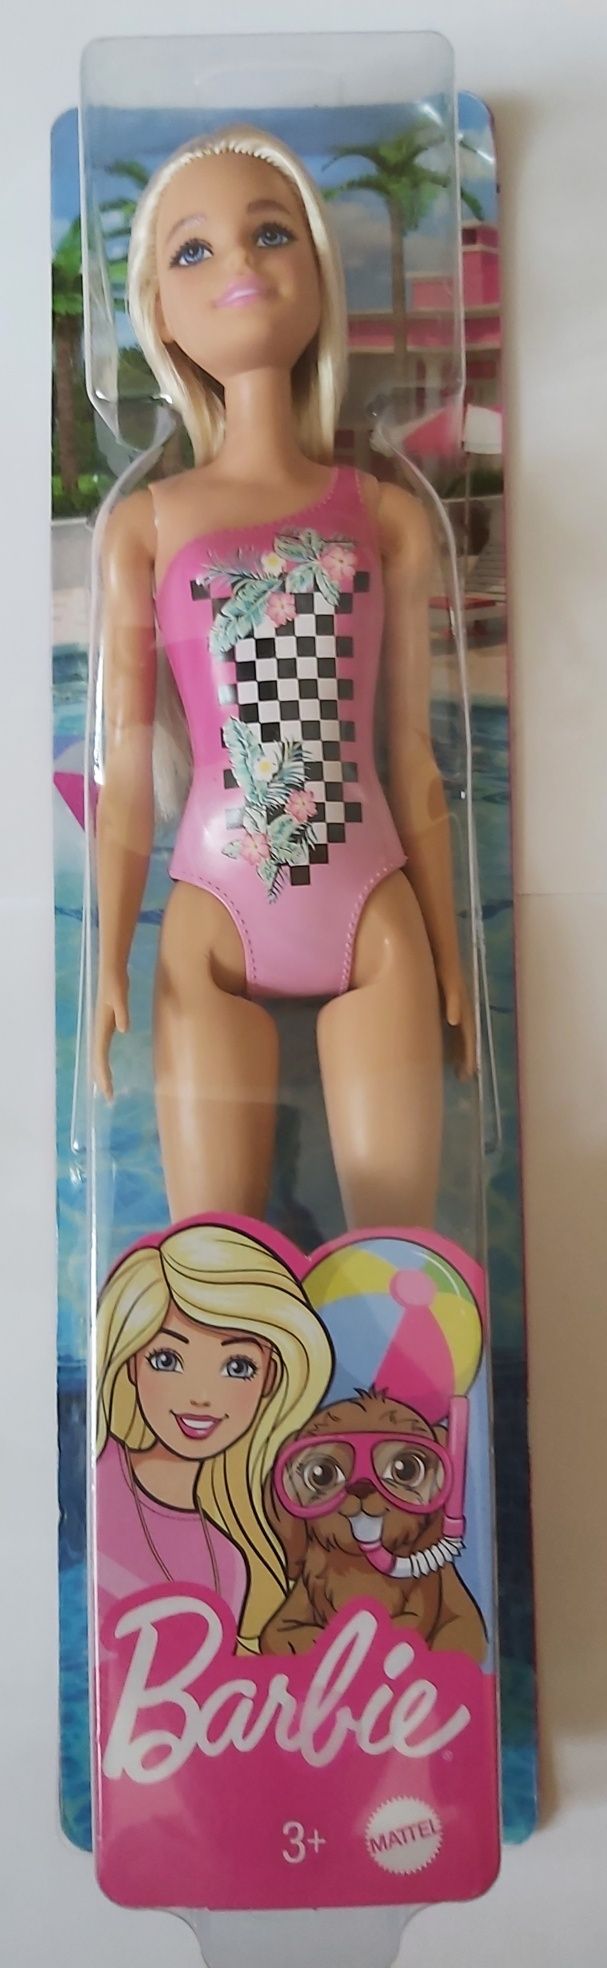 Lalka Barbie plażowa (wzór 1)